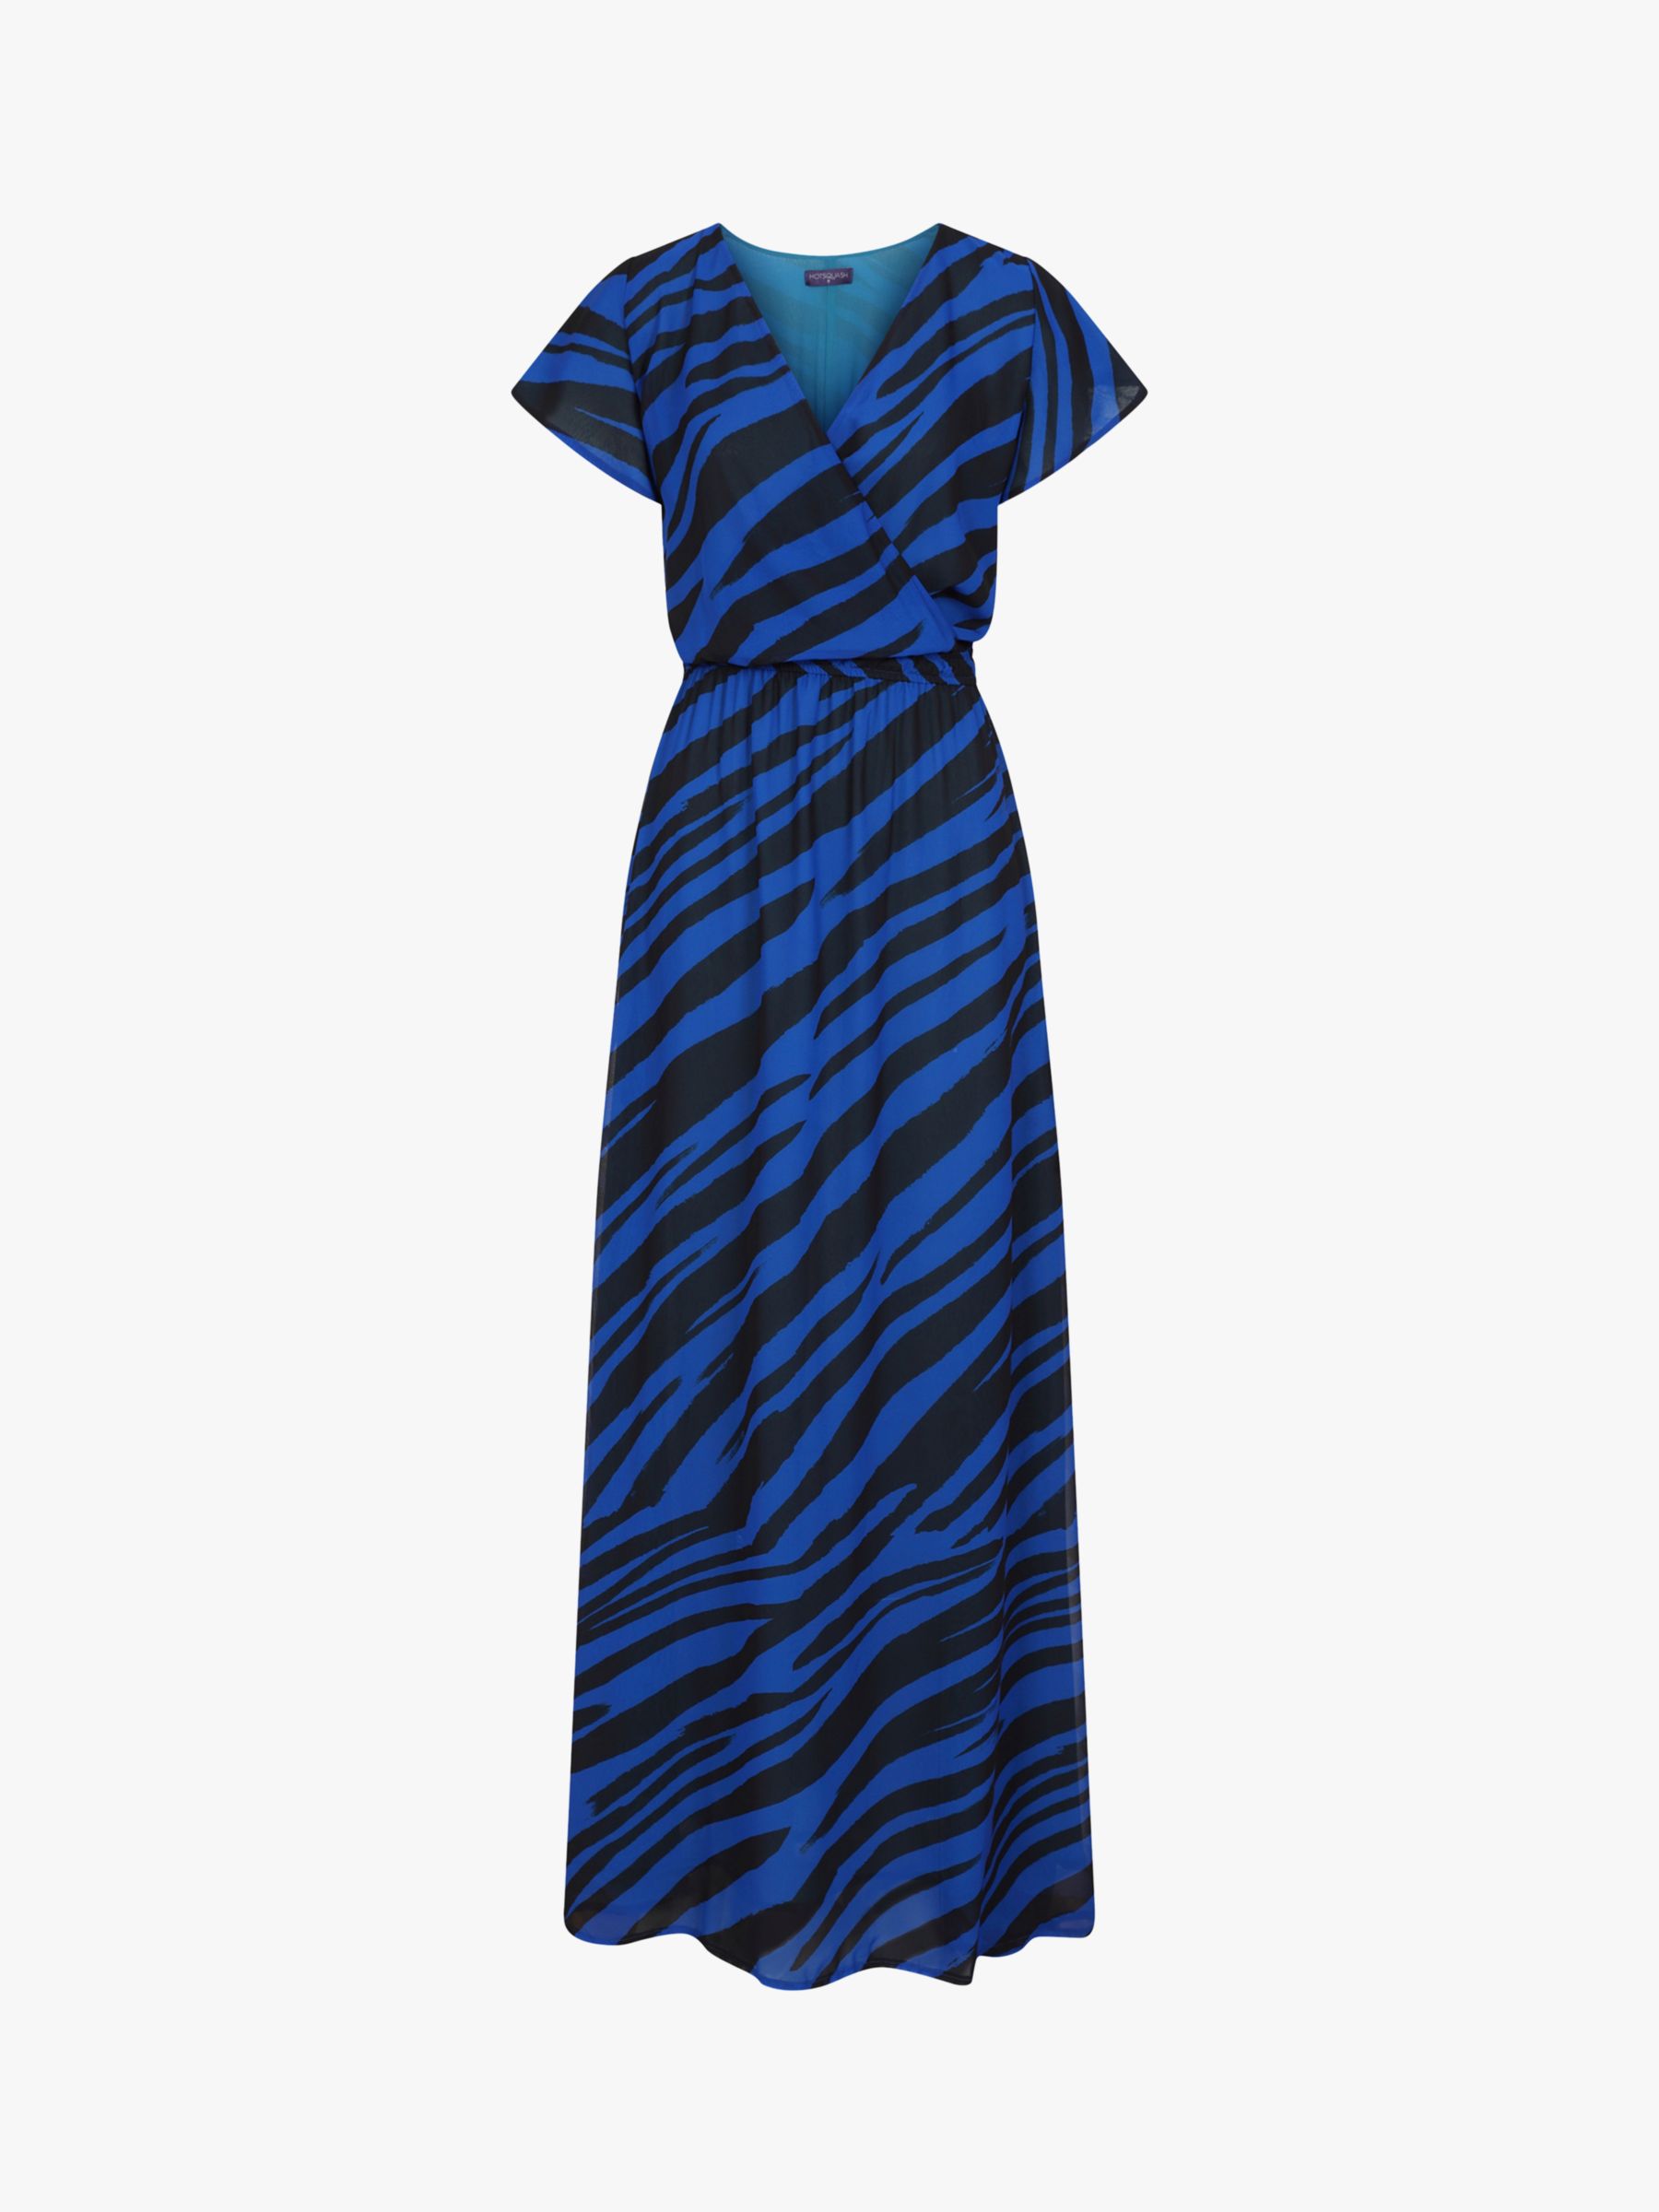 HotSquash Zebra Print Wrap Top Maxi Dress, Blue/Black, 8